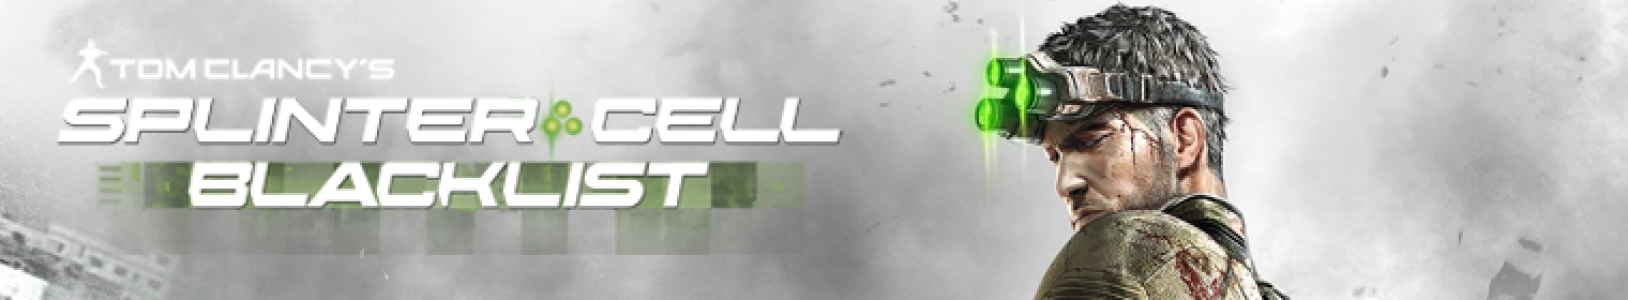 Tom Clancy's Splinter Cell: Blacklist banner